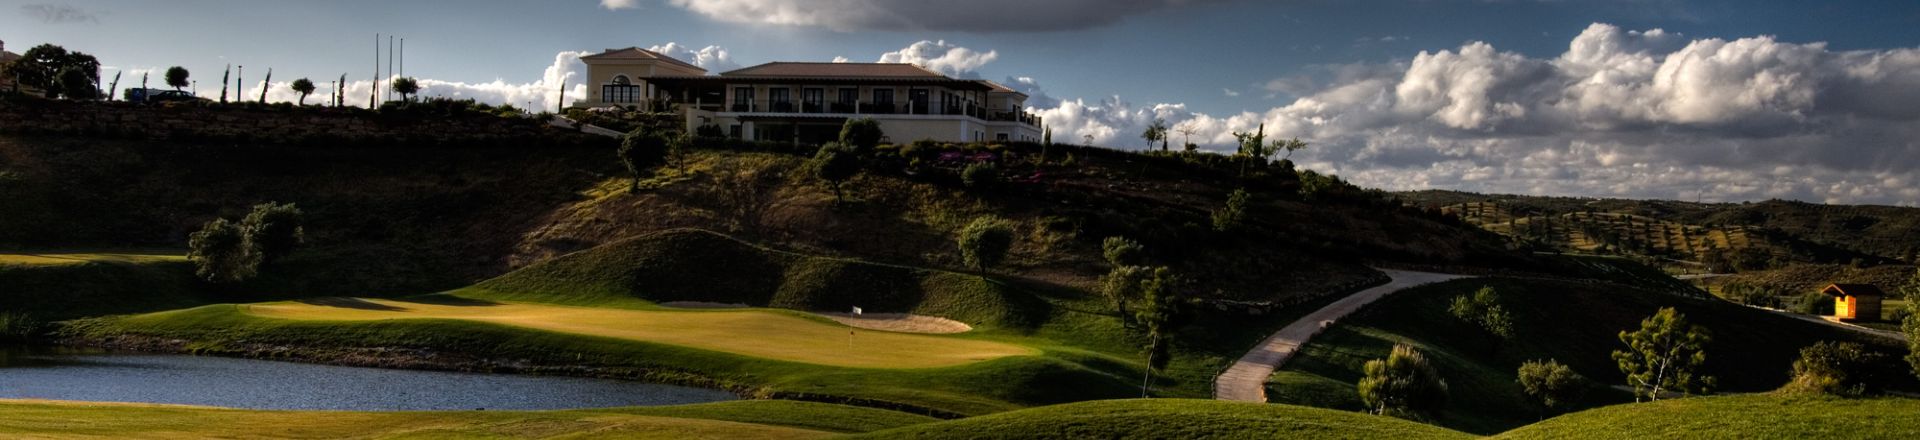 Quinta do Vale Golf Course near Tavira on the Algarve